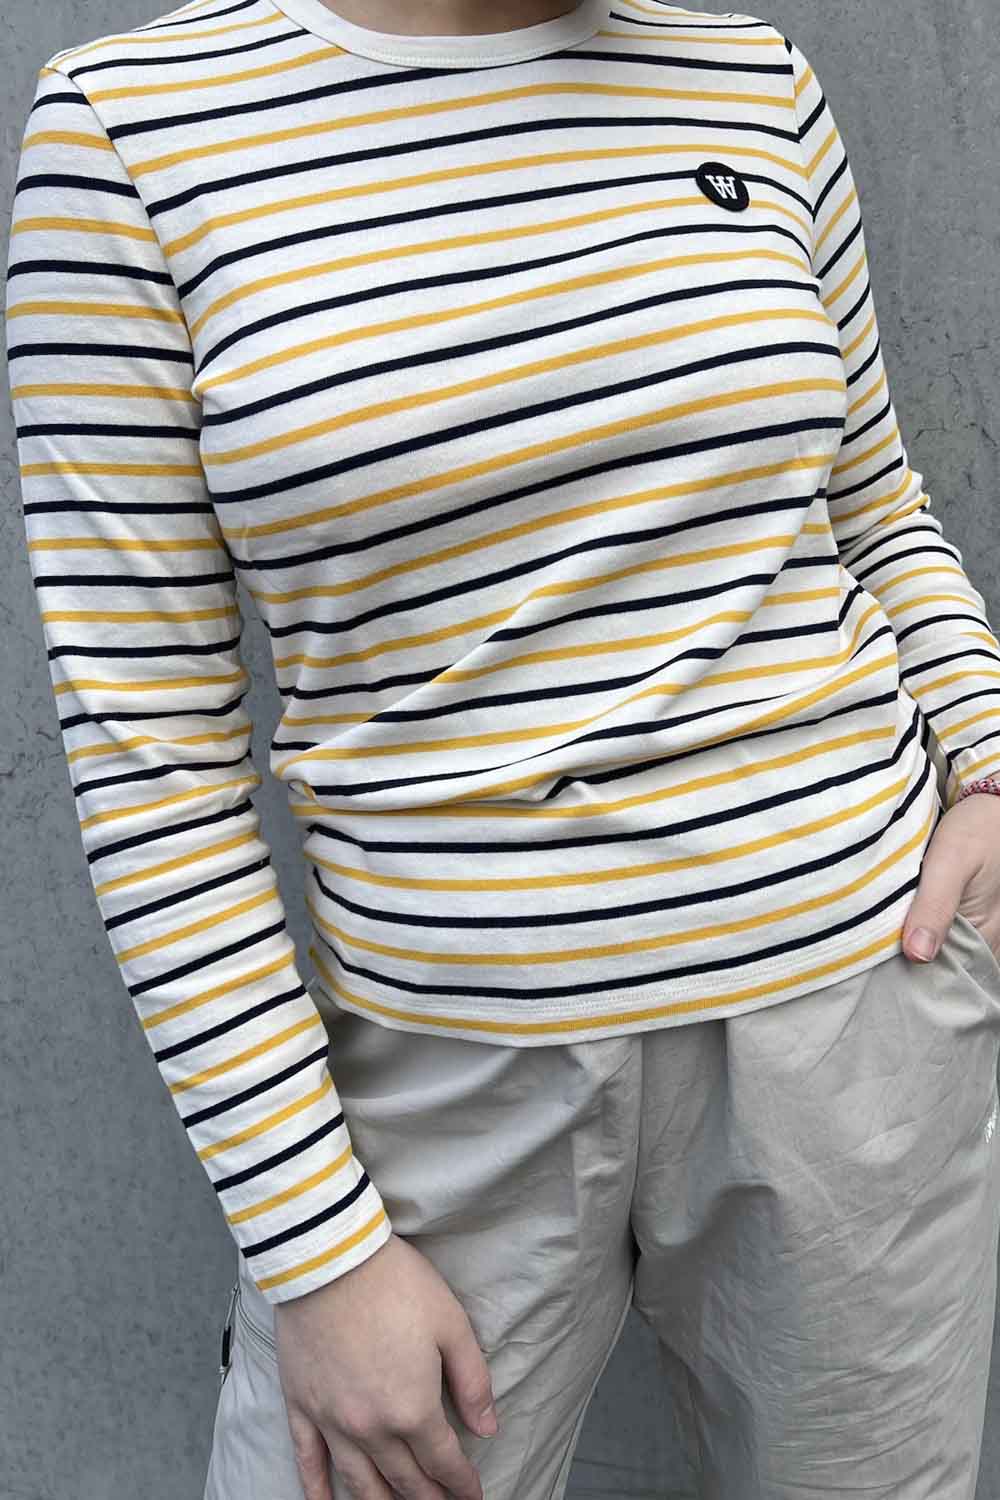 Moa Stripe Long Sleeve - Off-white/yellow stripes - Wood Wood